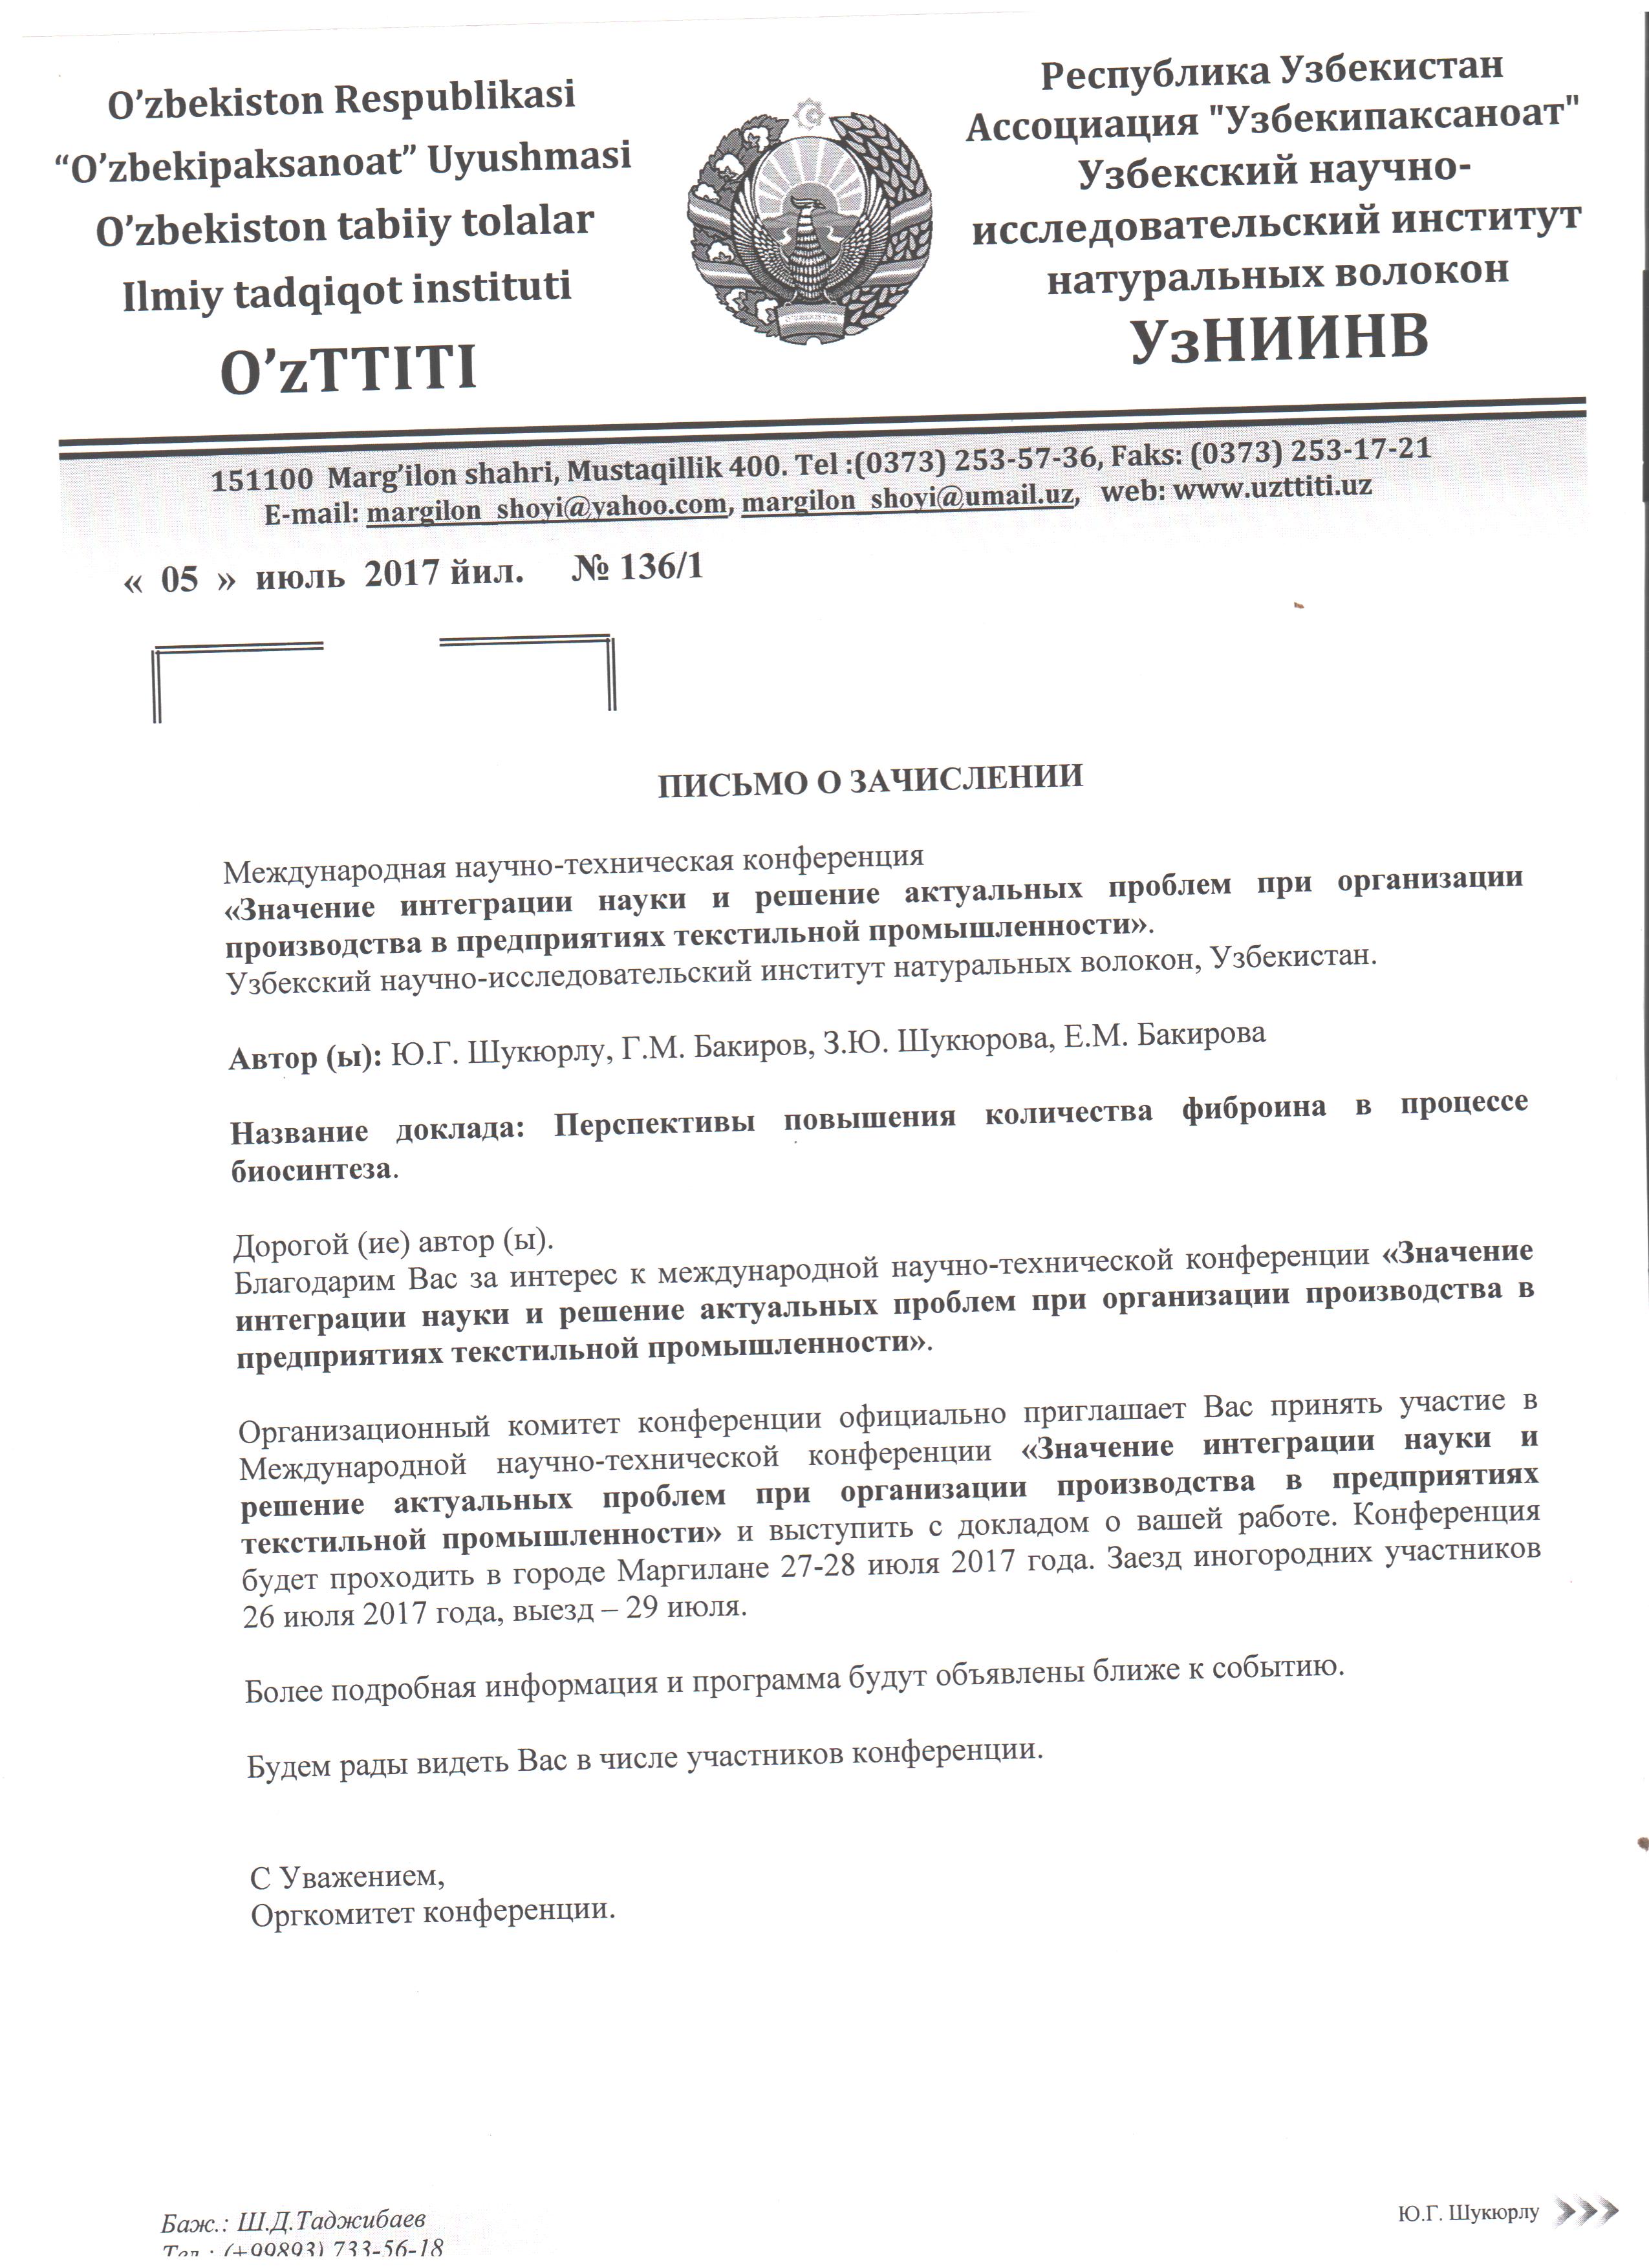 The employees of SRSC will visit Uzbekistan